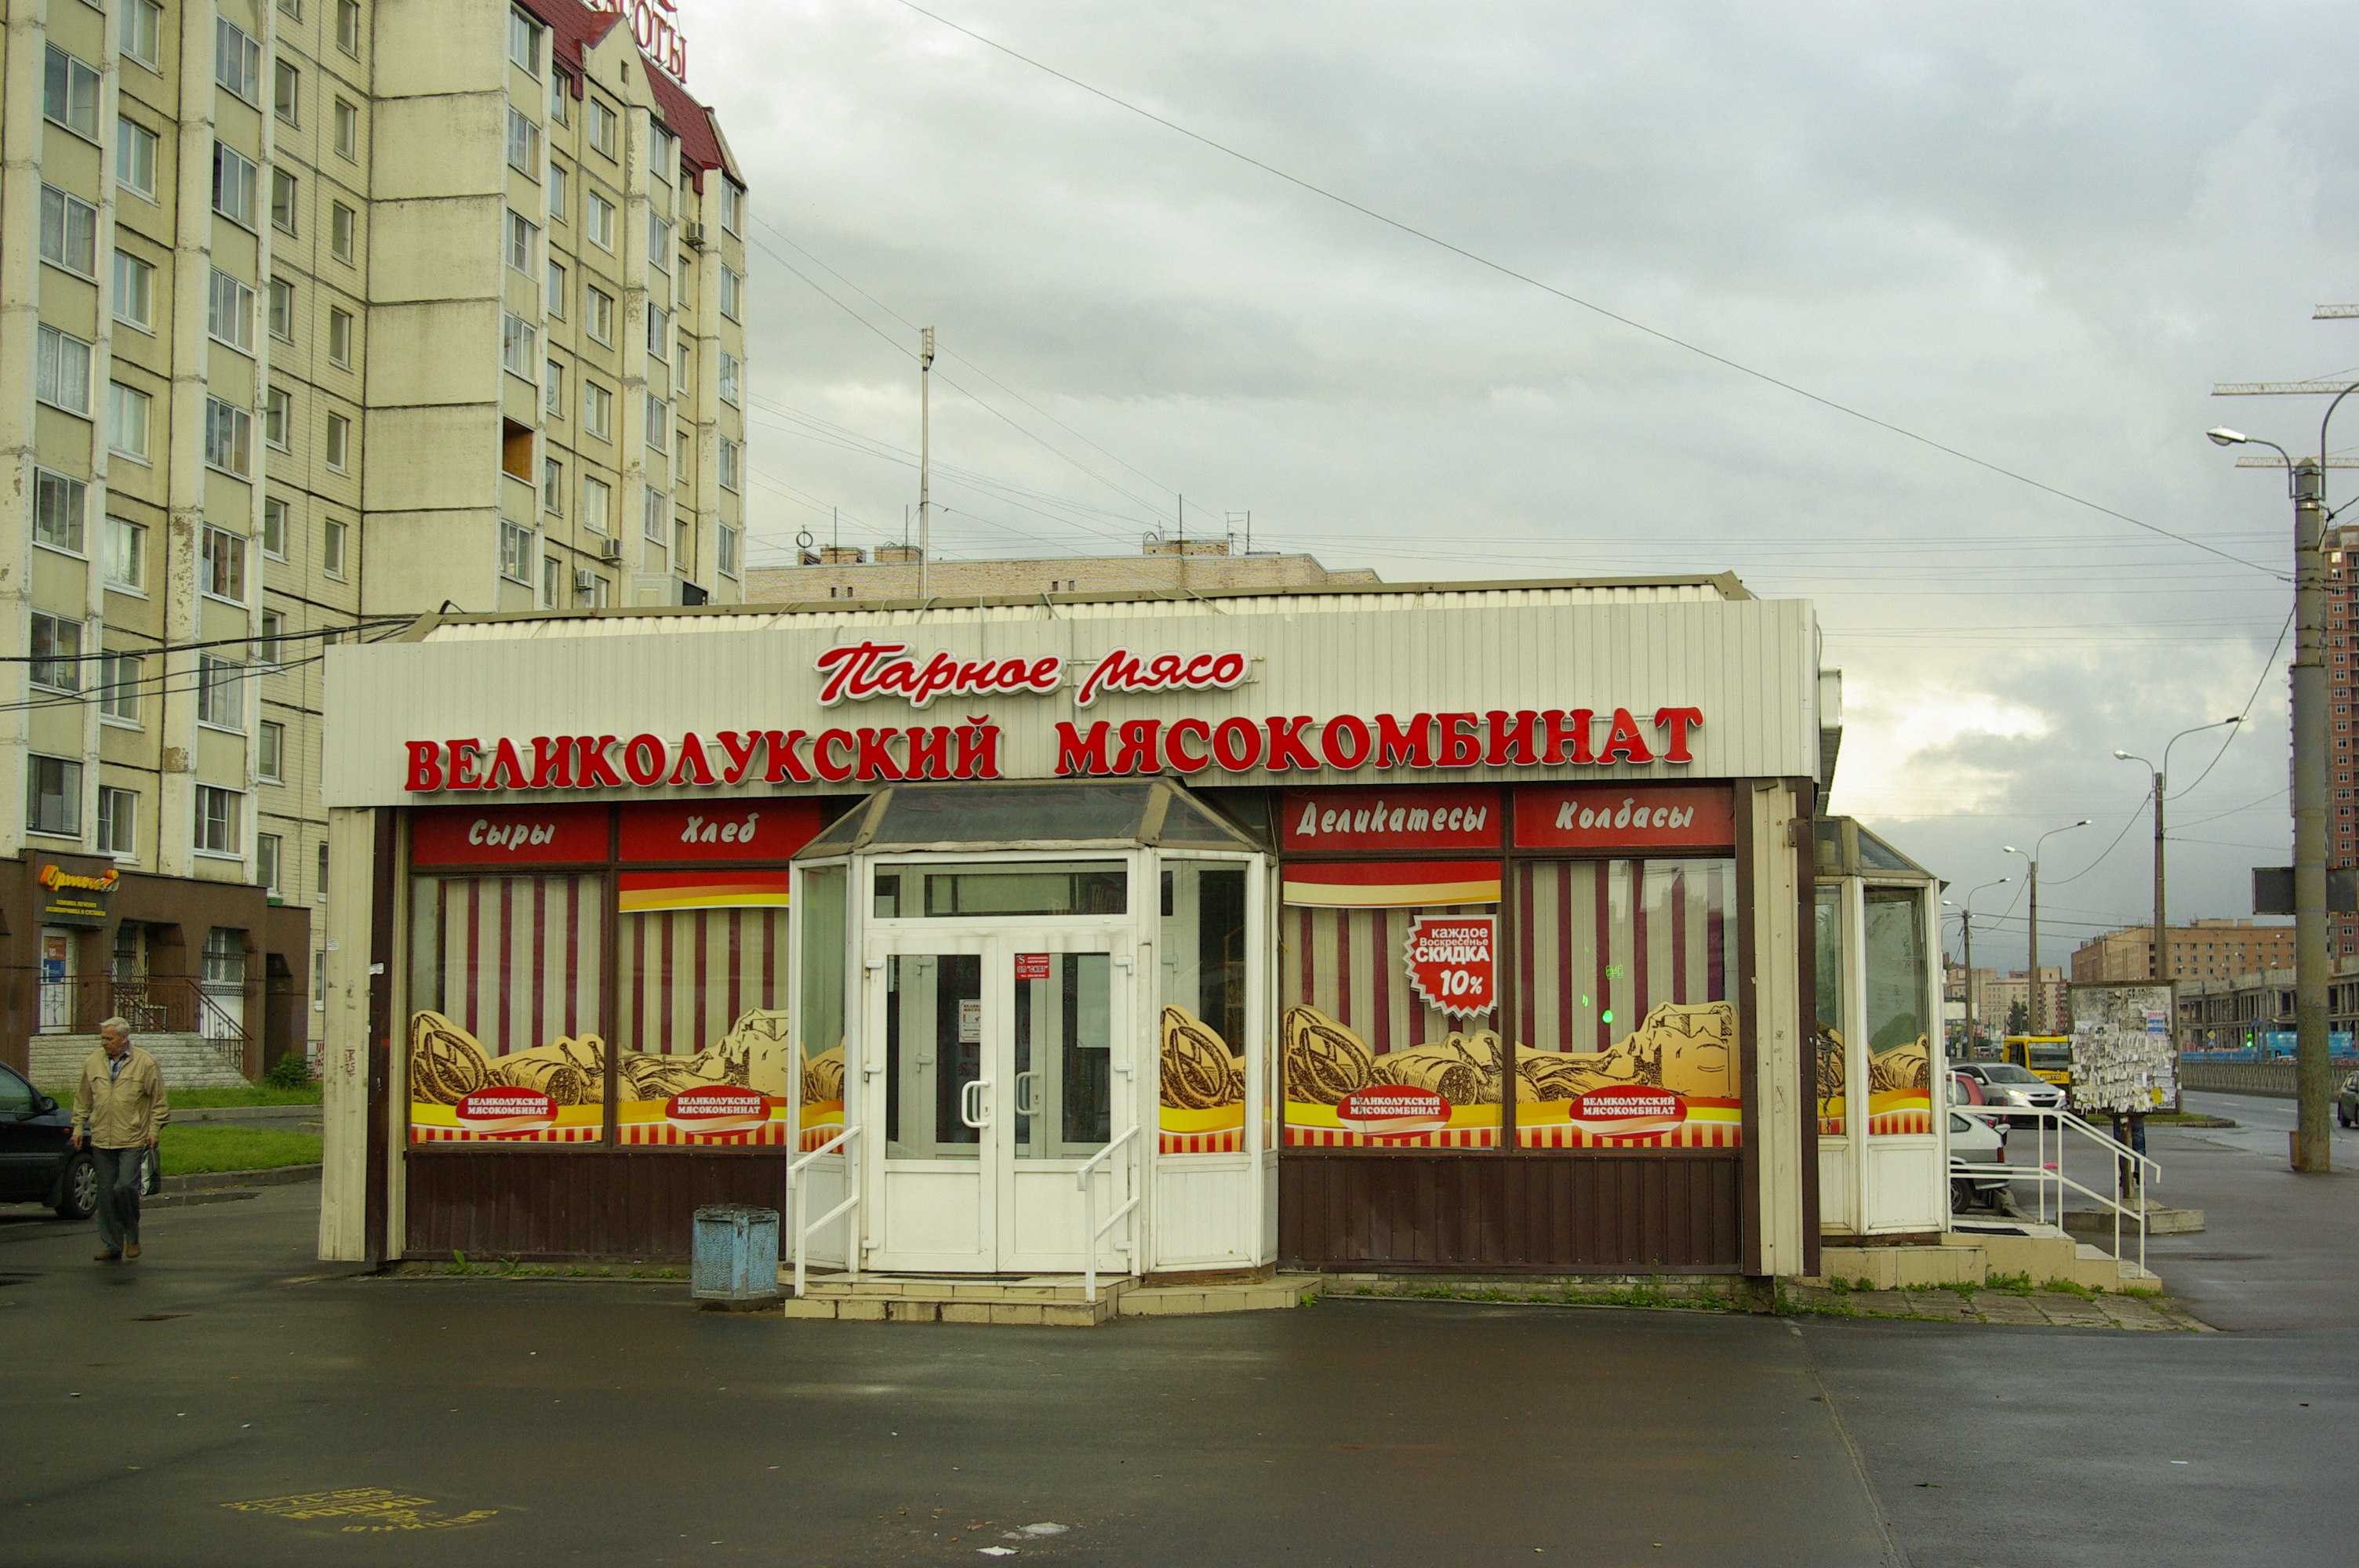 Мясокомбинат Петербург Великолукский Петербург